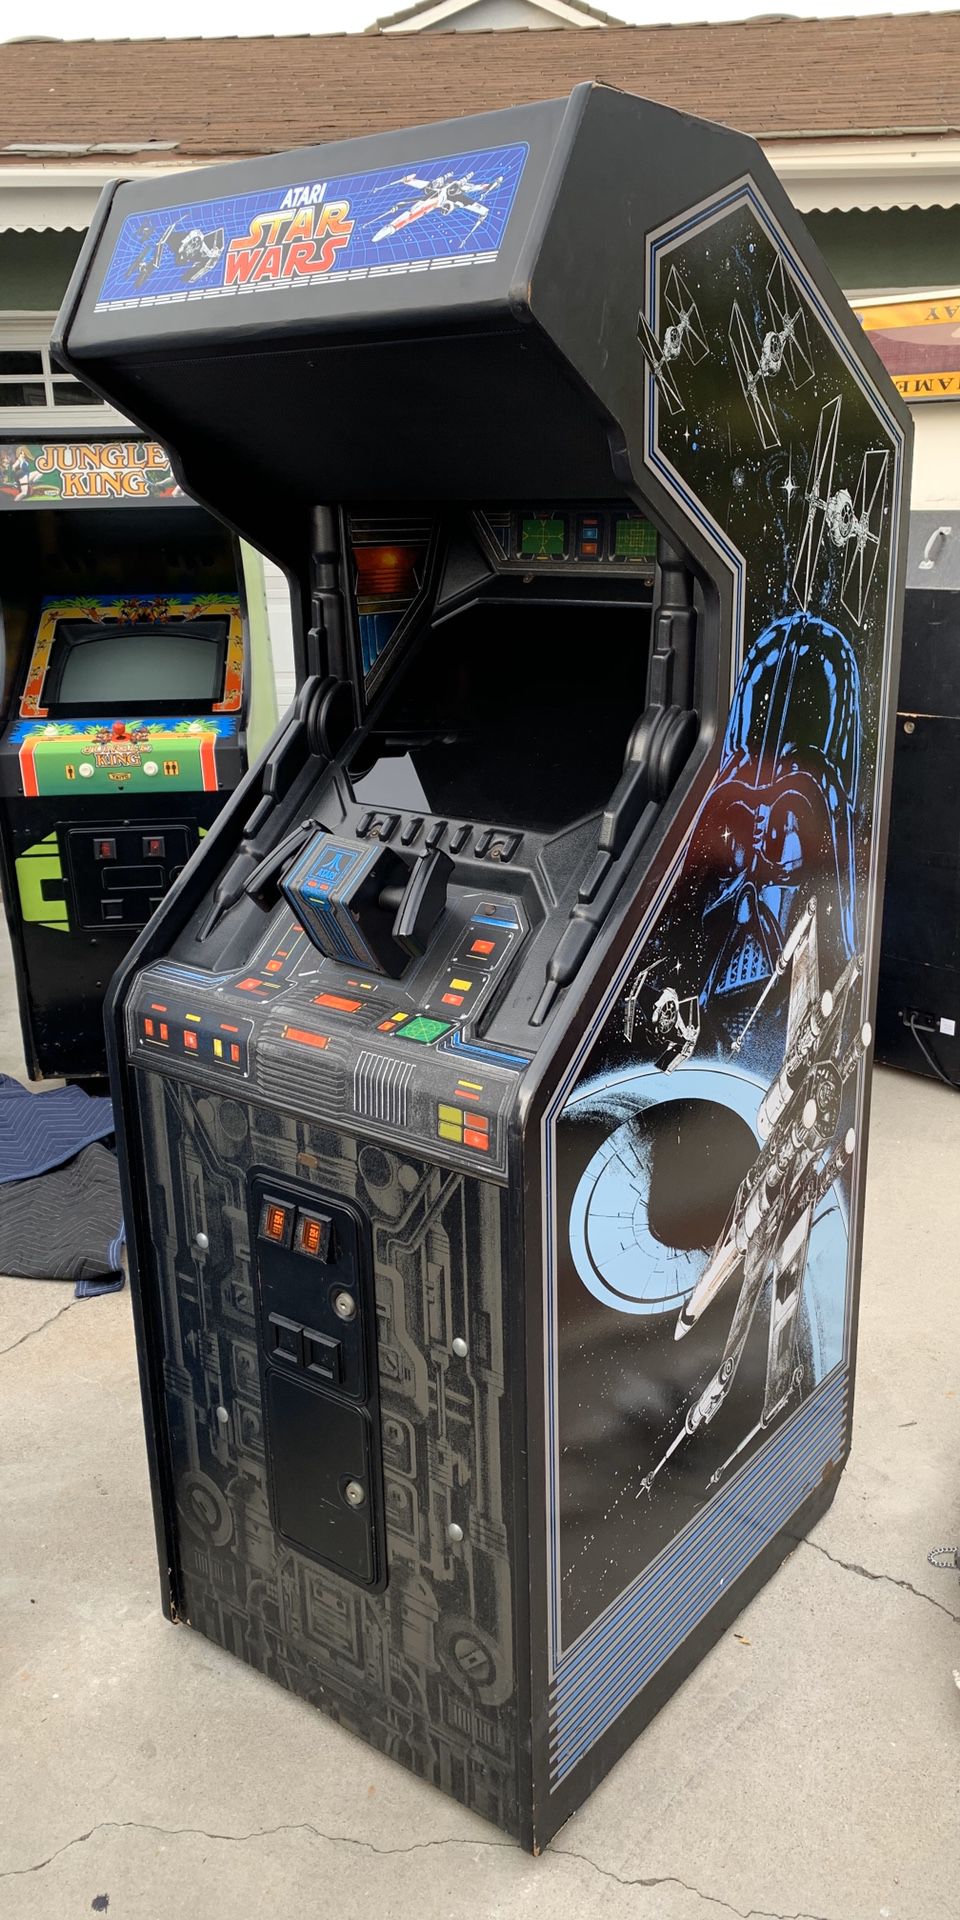 Atari Star Wars arcade game